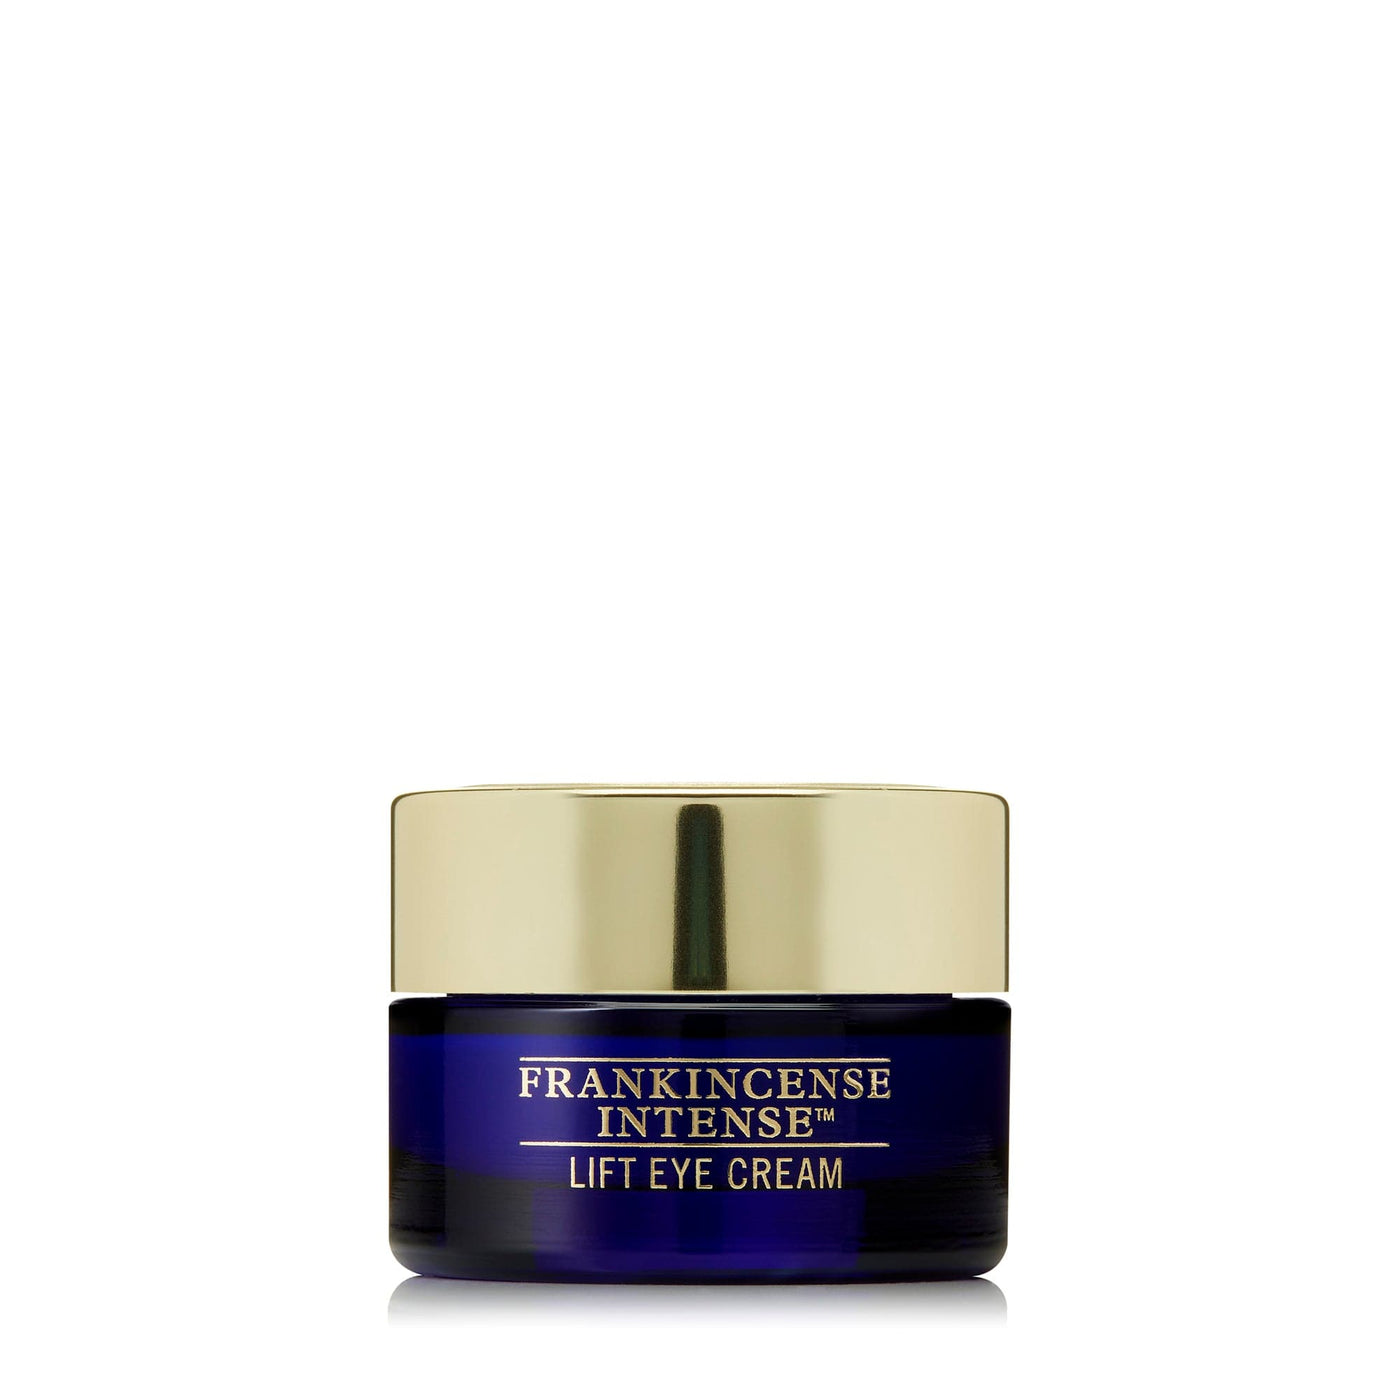 Neal's Yard Remedies Skincare Frankincense Intense™ Lift Eye Cream 0.53 oz.